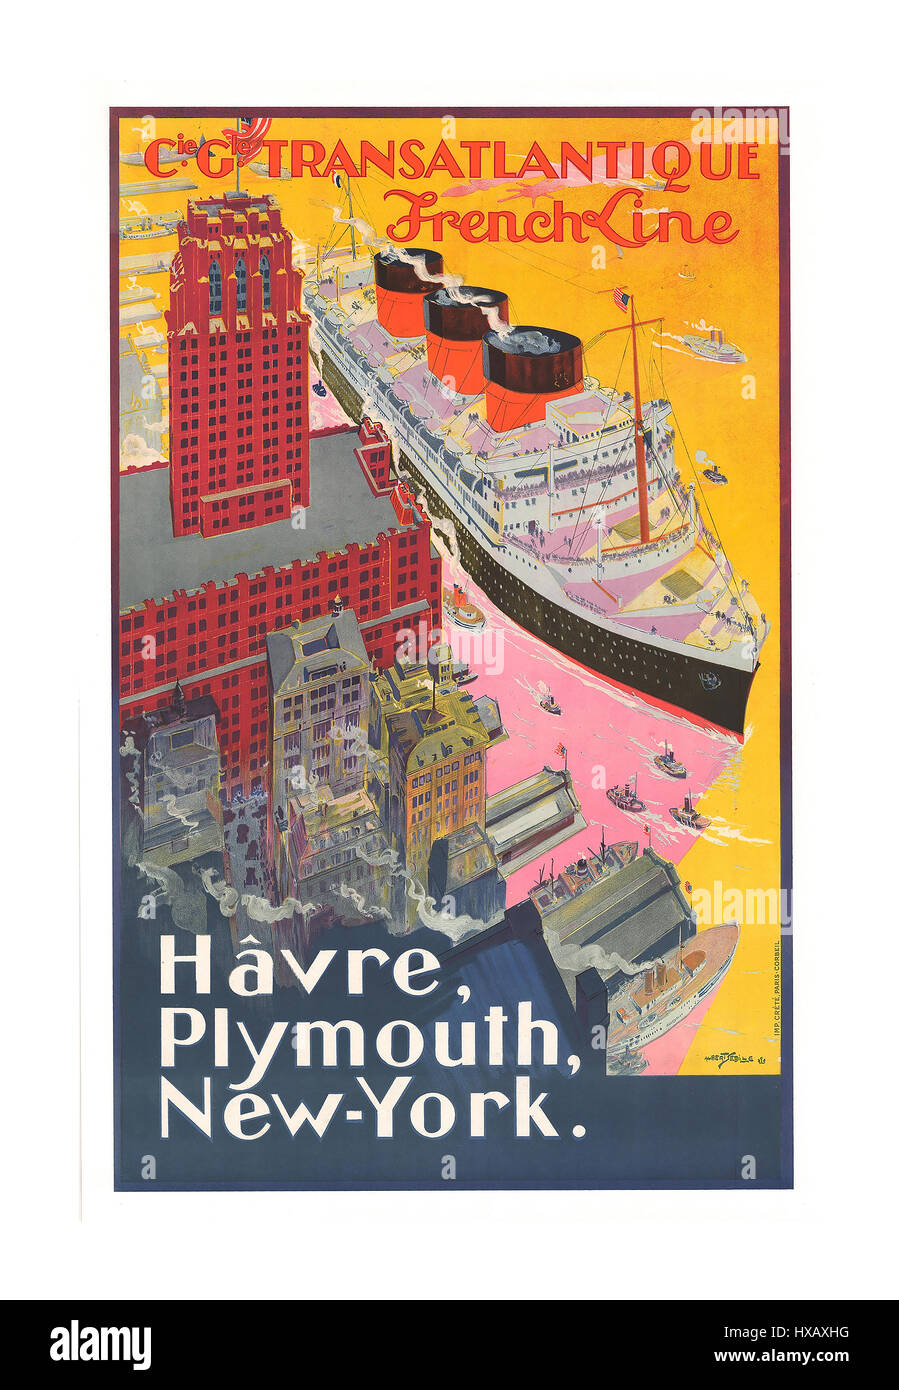 1920's Vintage Poster Cruise ship French Line steamship Compagnie Générale Transatlantique Le Havre-Plymouth- New-York by artist Albert Sébille Stock Photo